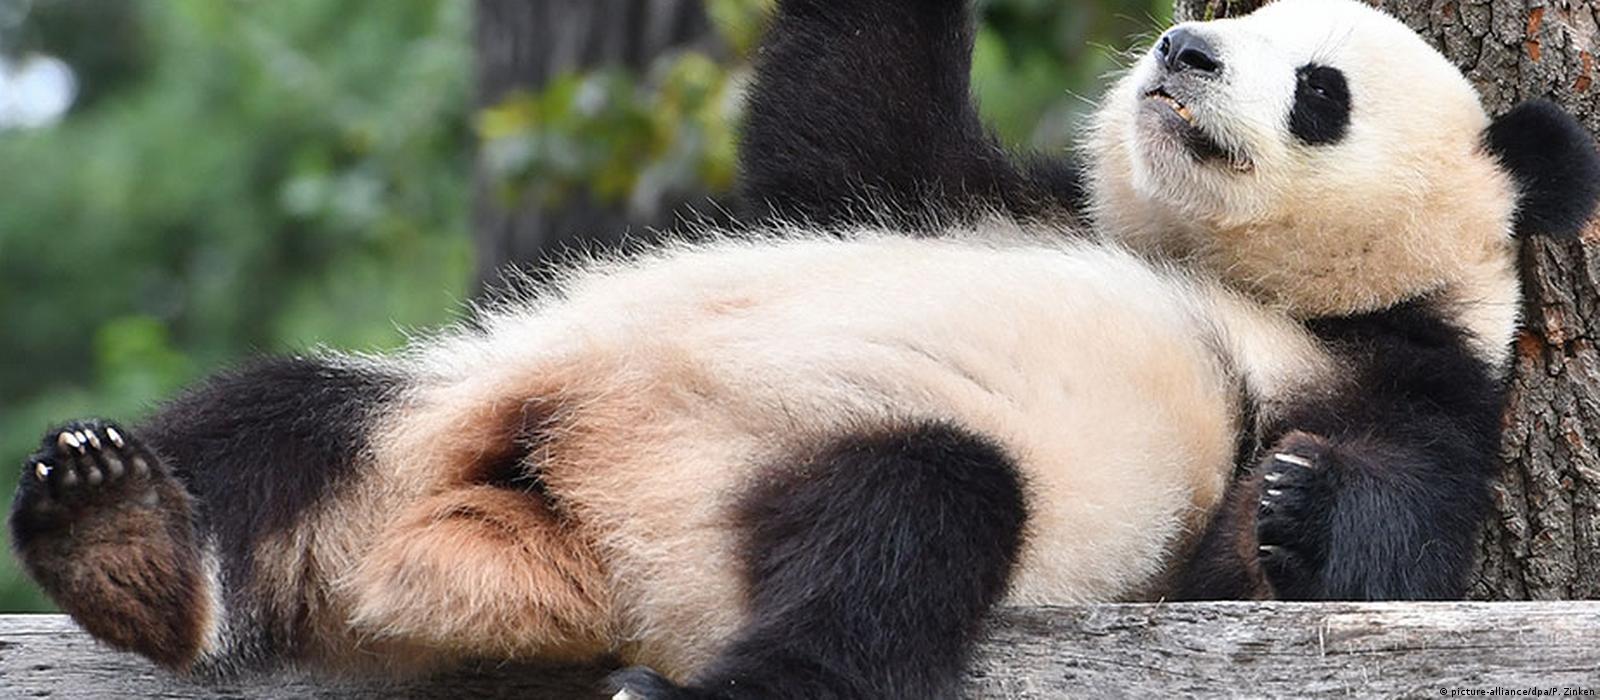 China plans huge national park for pandas – DW – 03/08/2018